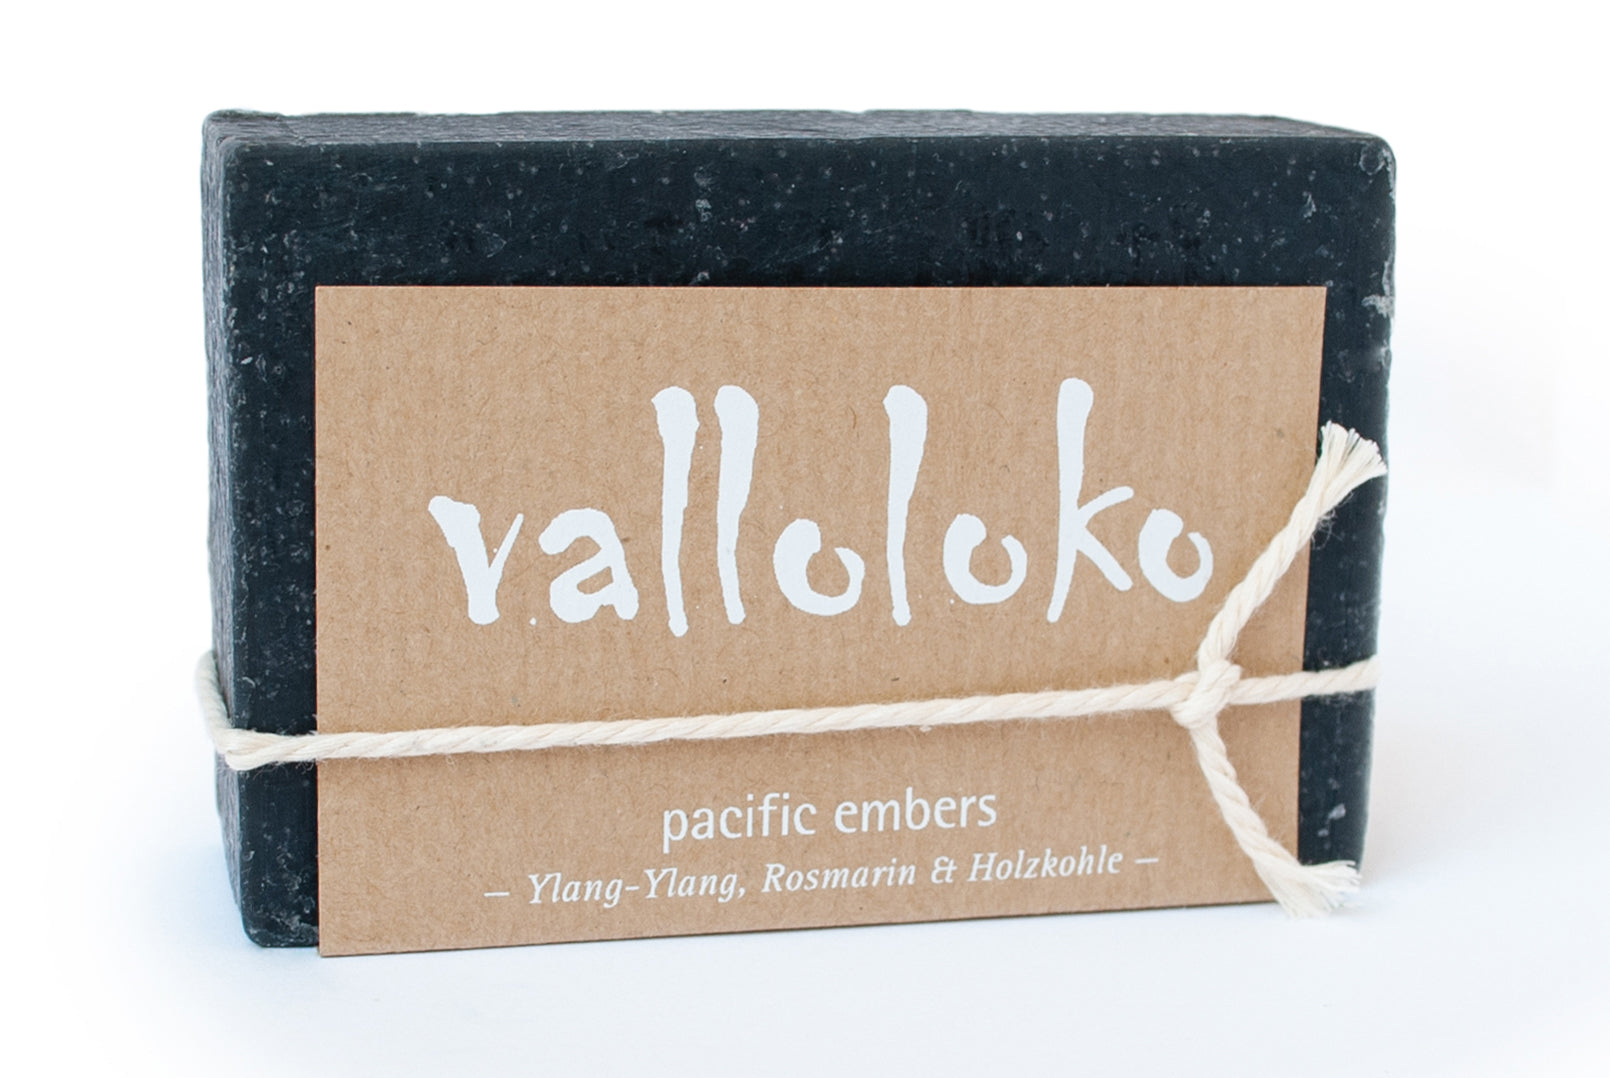 Schwarze Pacific Embers Seife mit Ylang Ylang und Aktivkohle plastikfrei verpackt